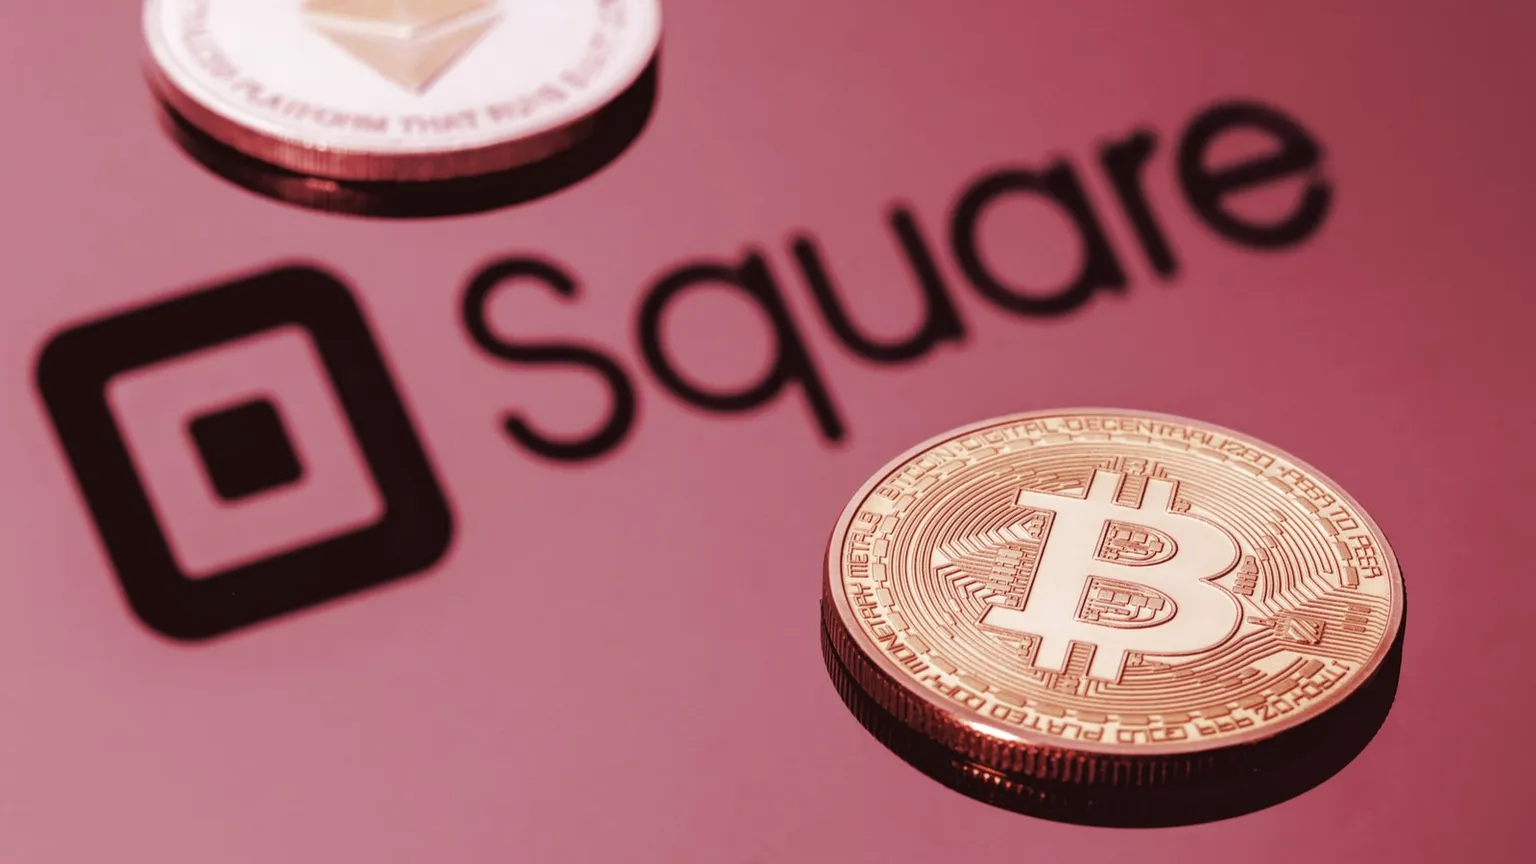 Square y Bitcoin. Imagen: Shutterstock